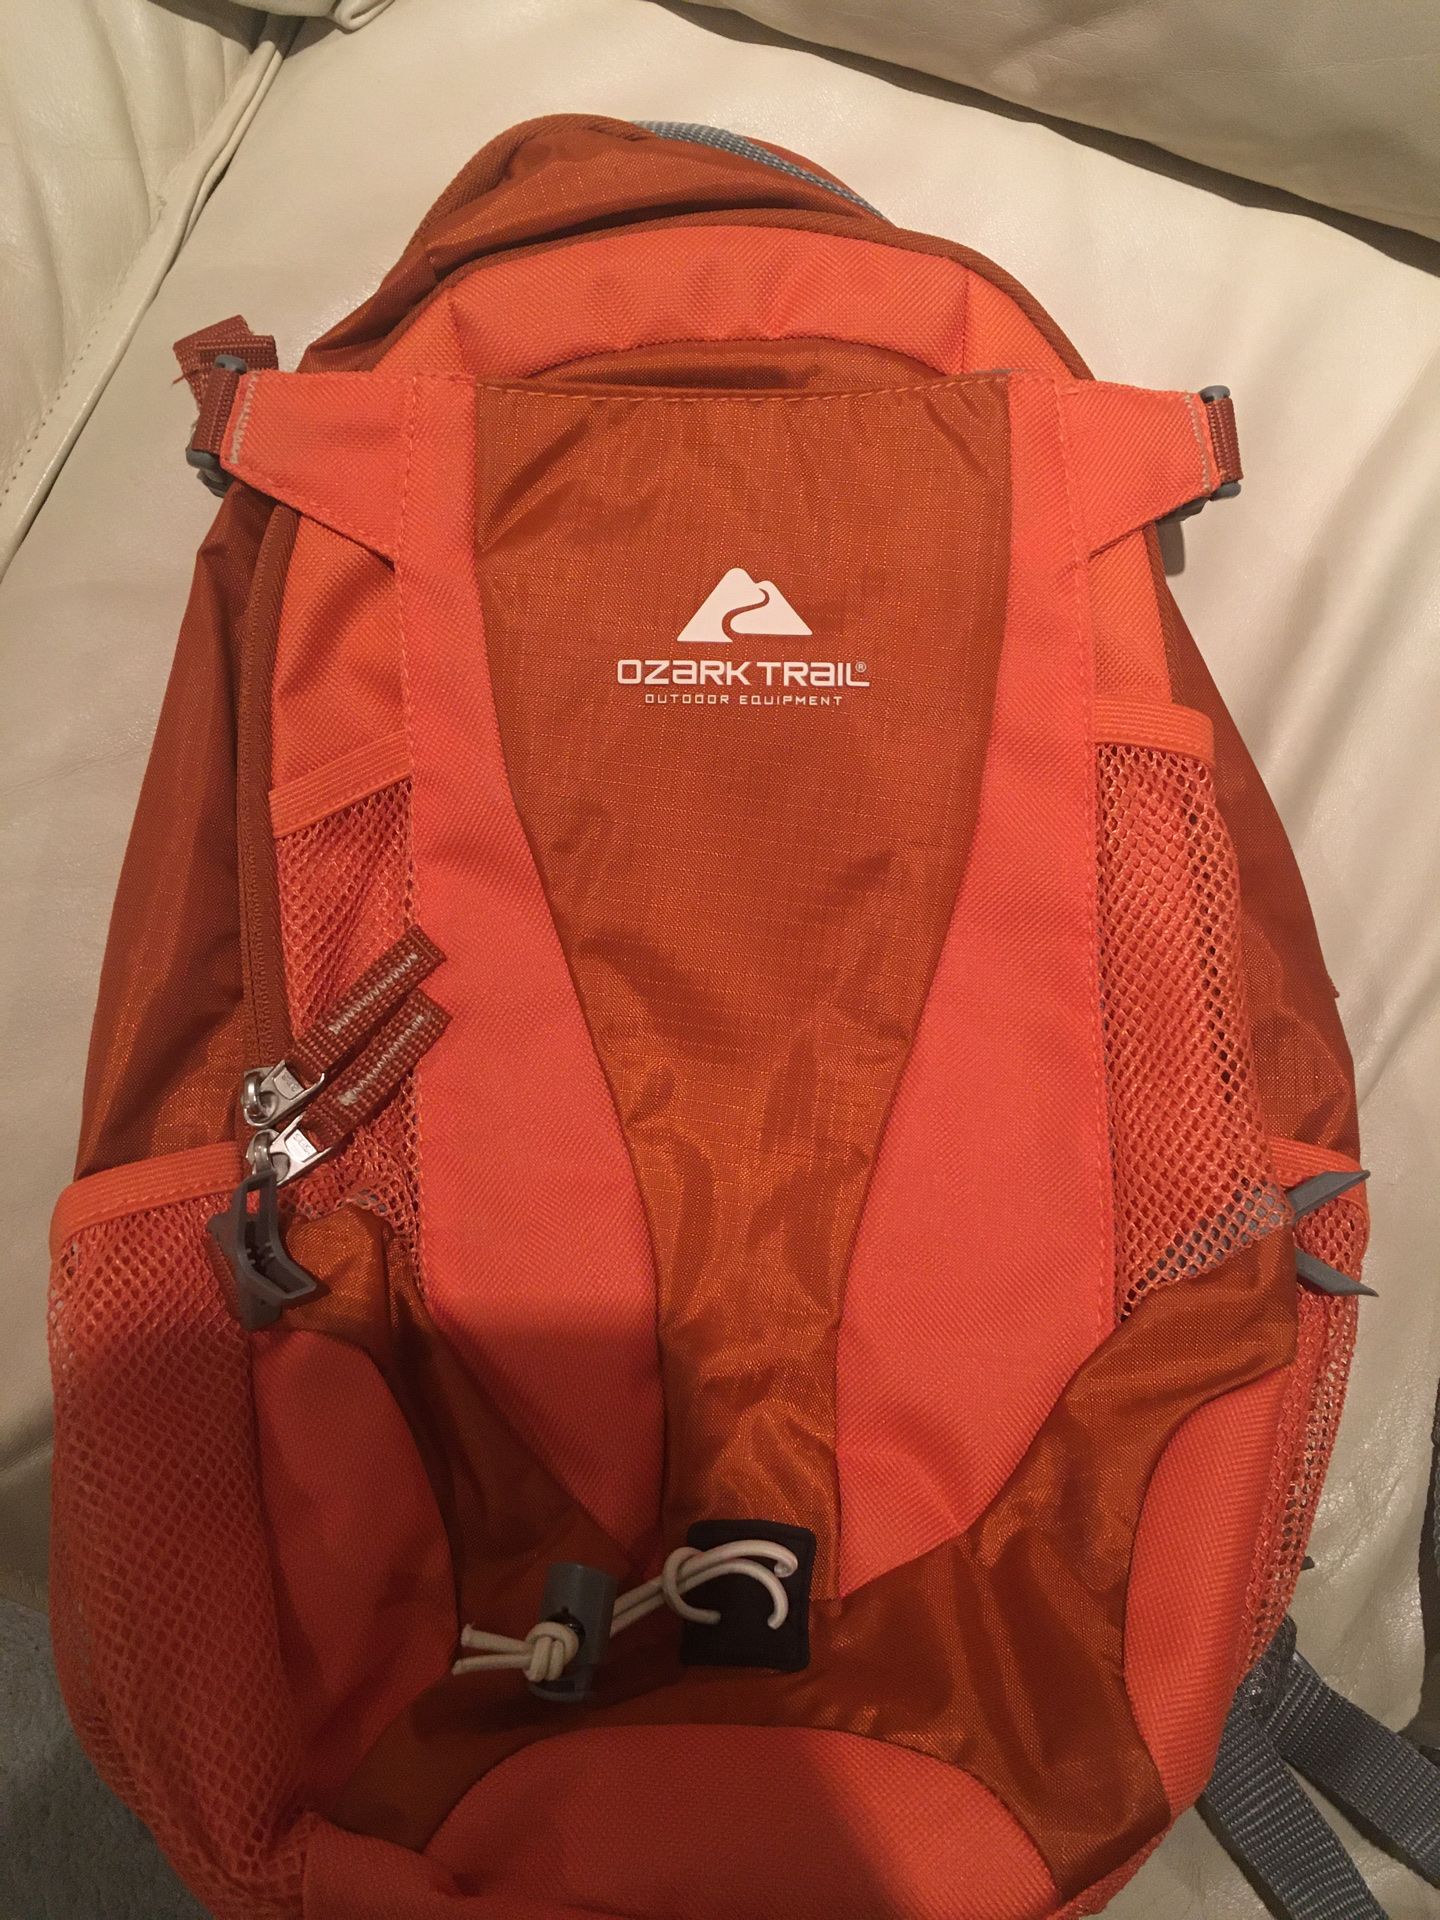 Ozark Trail Hydration Travel/Sport Backpack